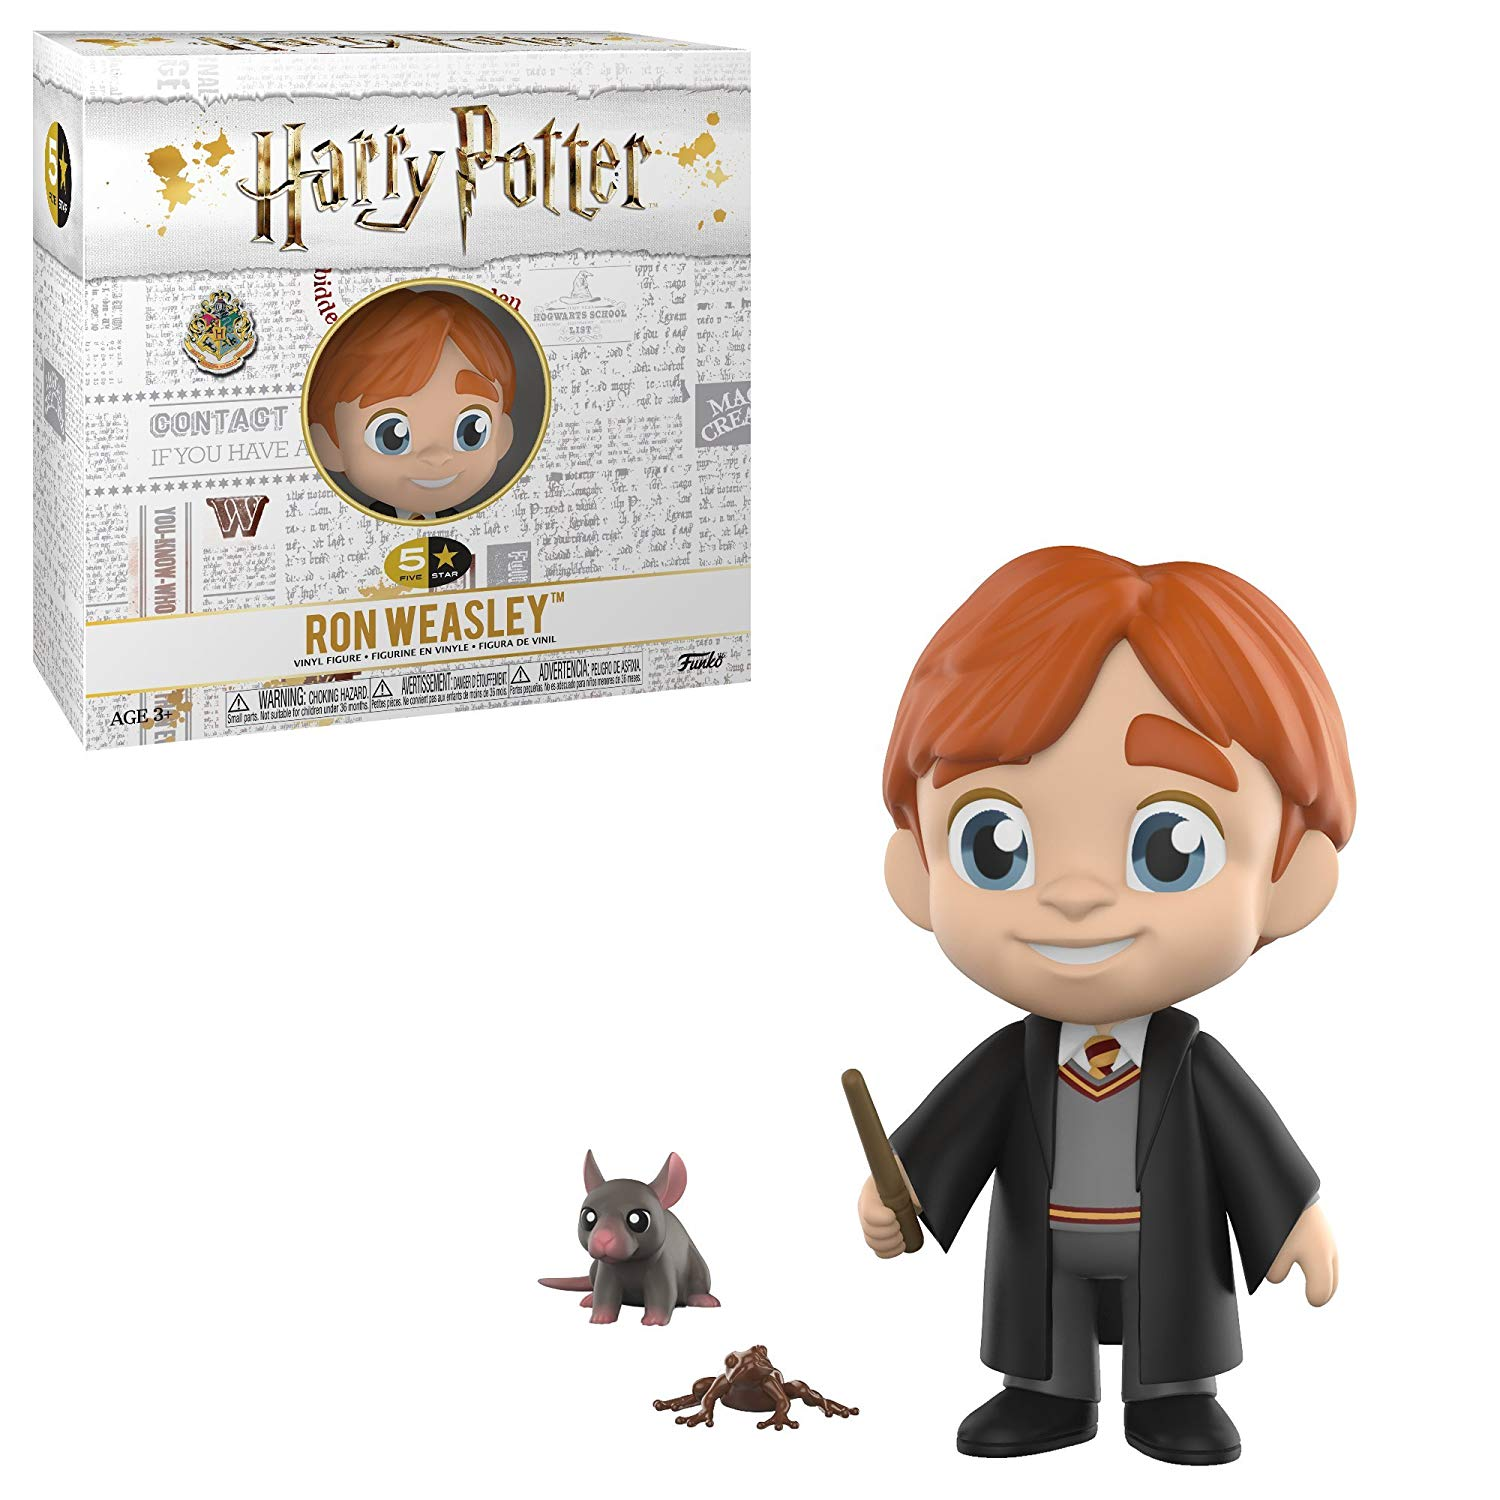 5 Star Potter - Ron Weasley Harry